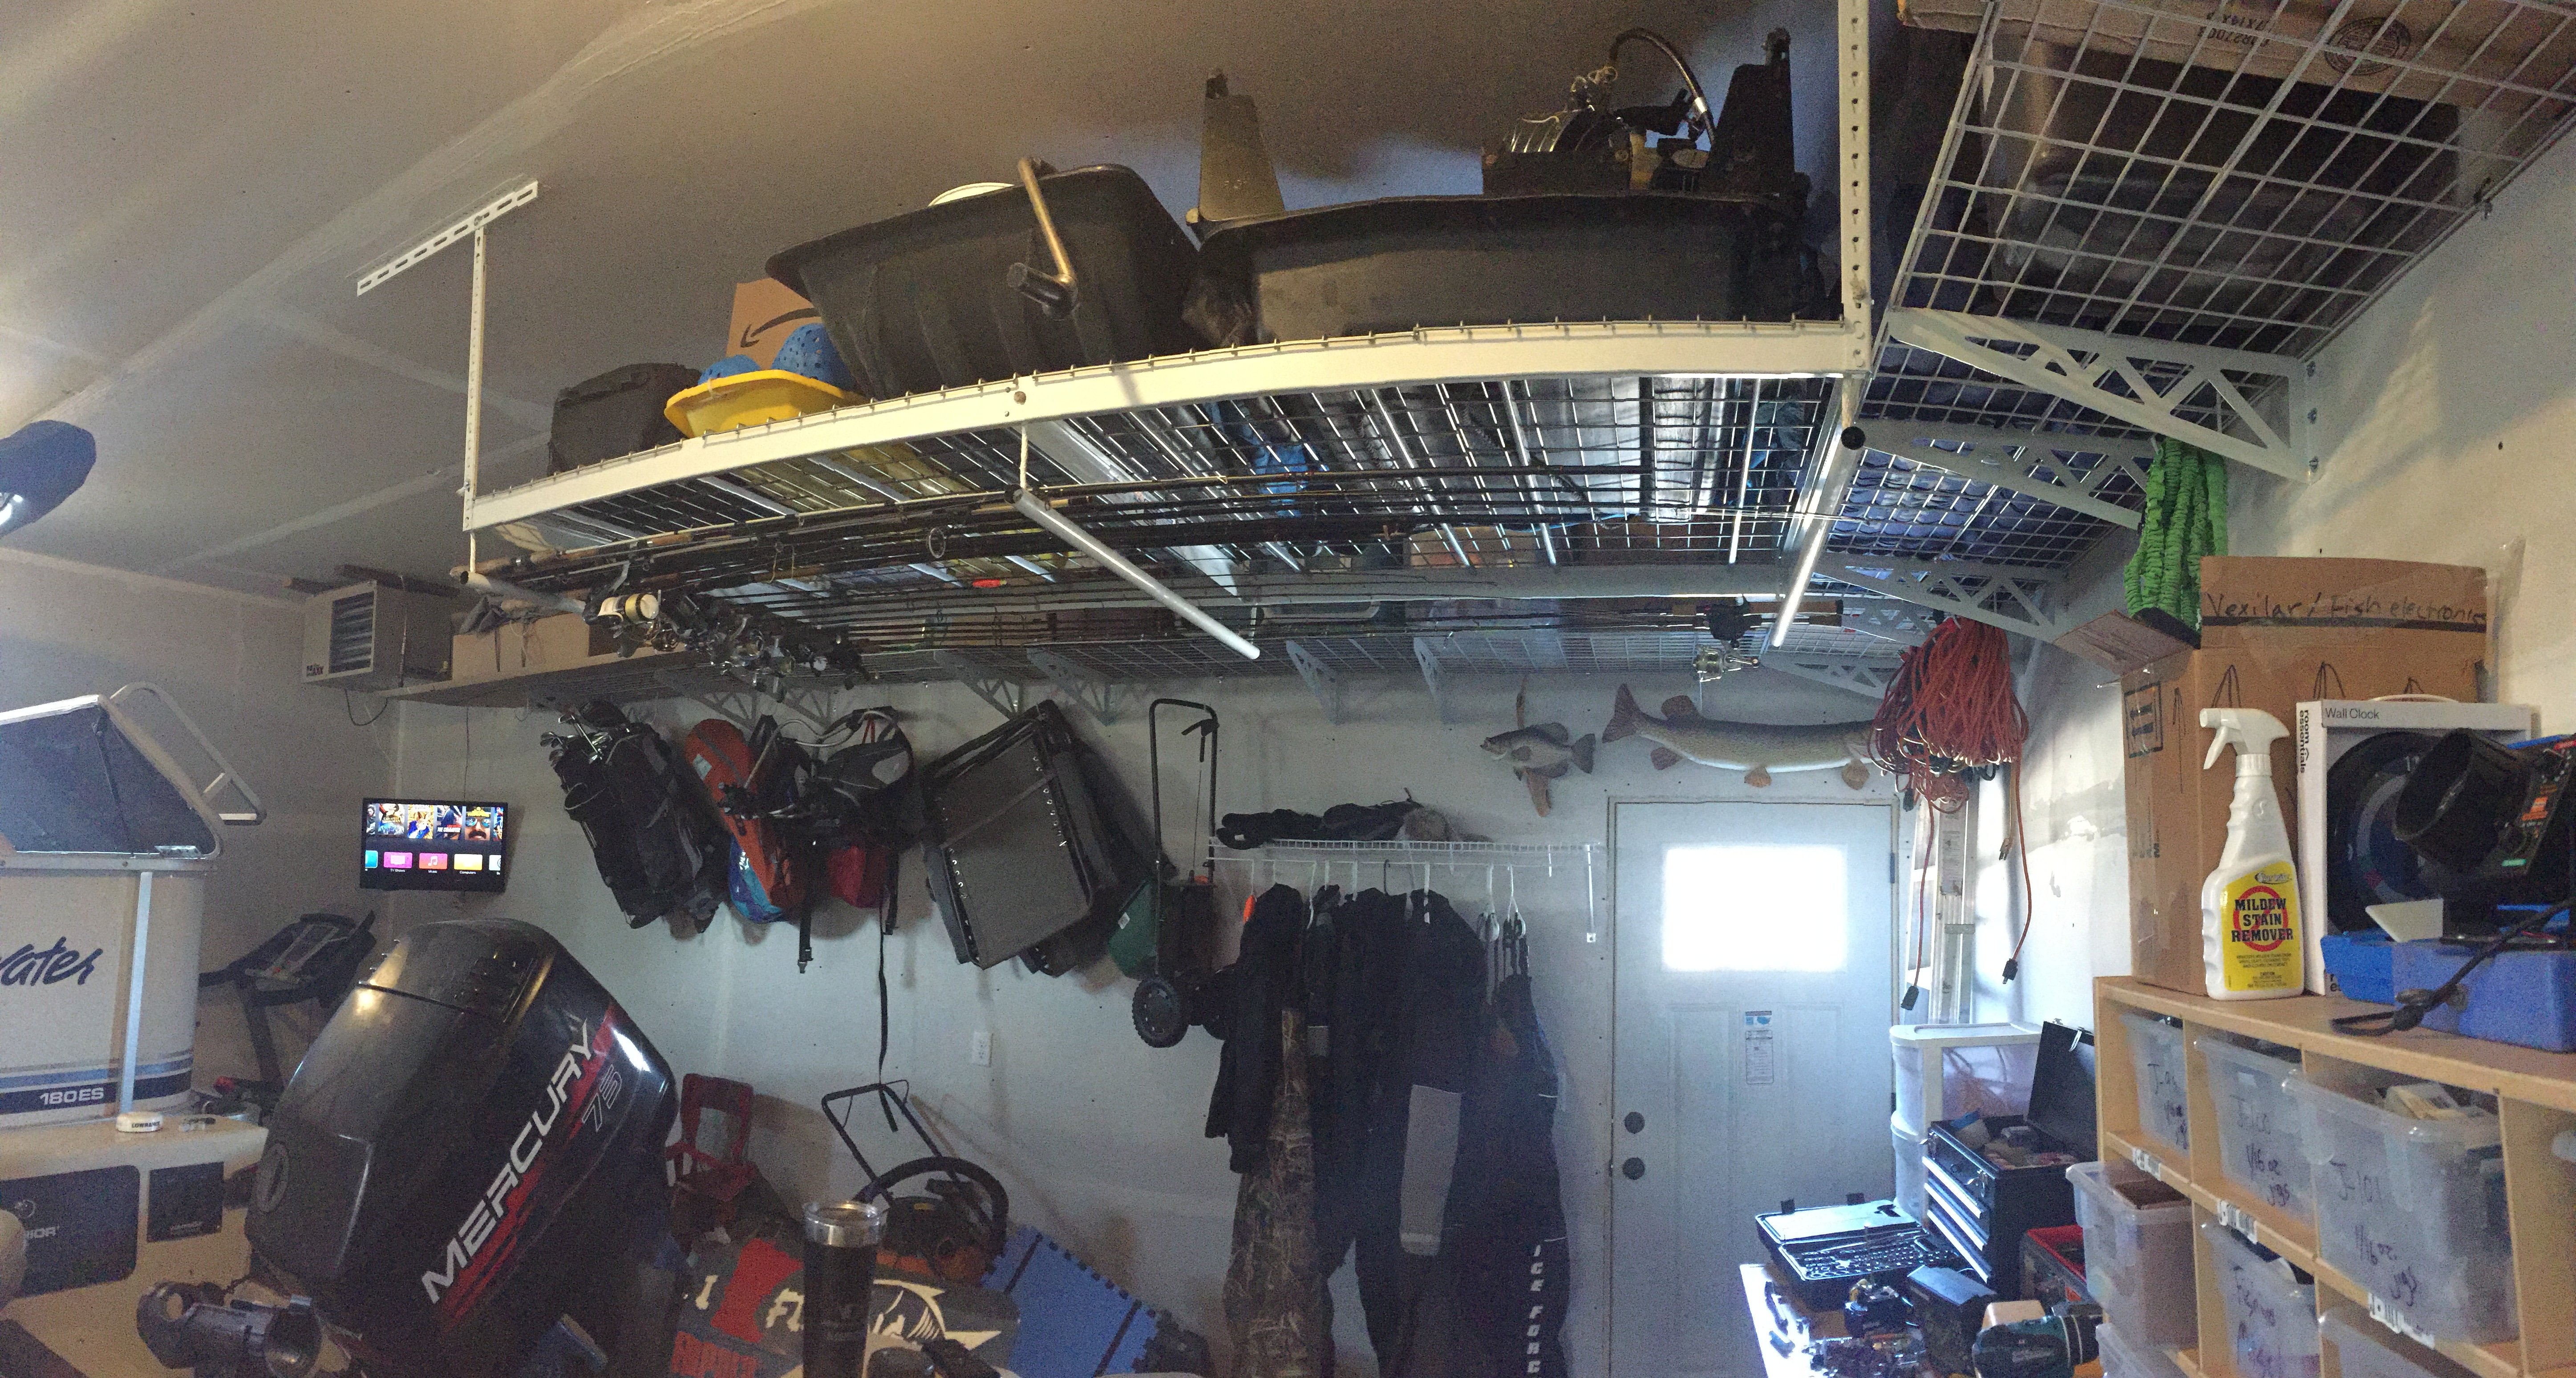 Ideas for a garage ceiling rod rack? - Main Forum - SurfTalk